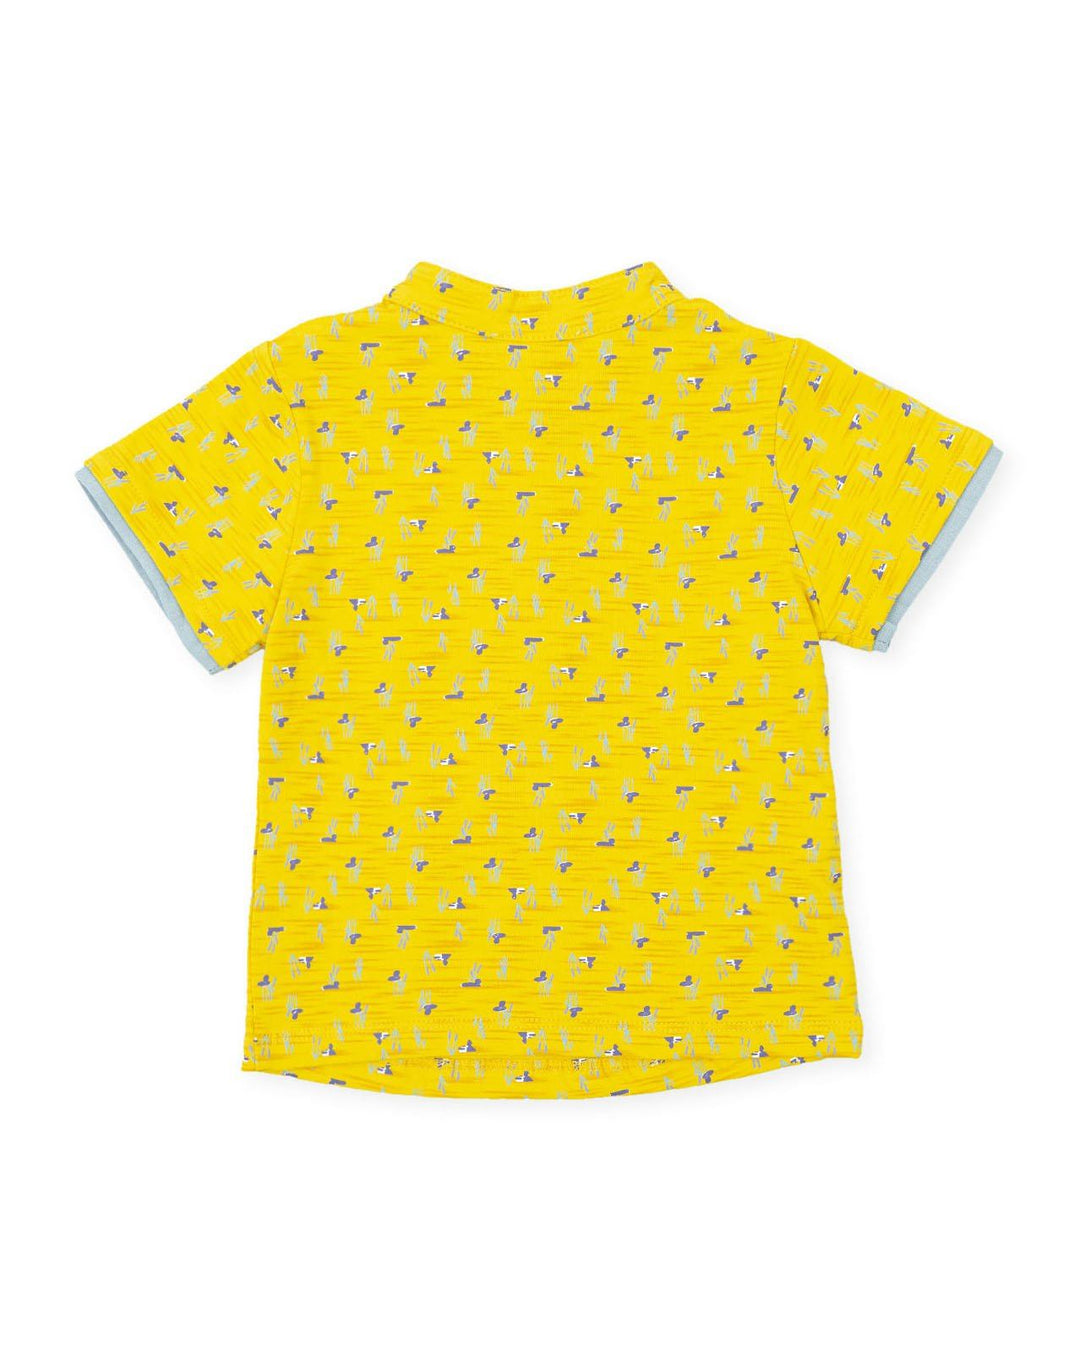 Tutto Piccolo "Luan" Yellow Shirt & Sage Green Shorts | Millie and John